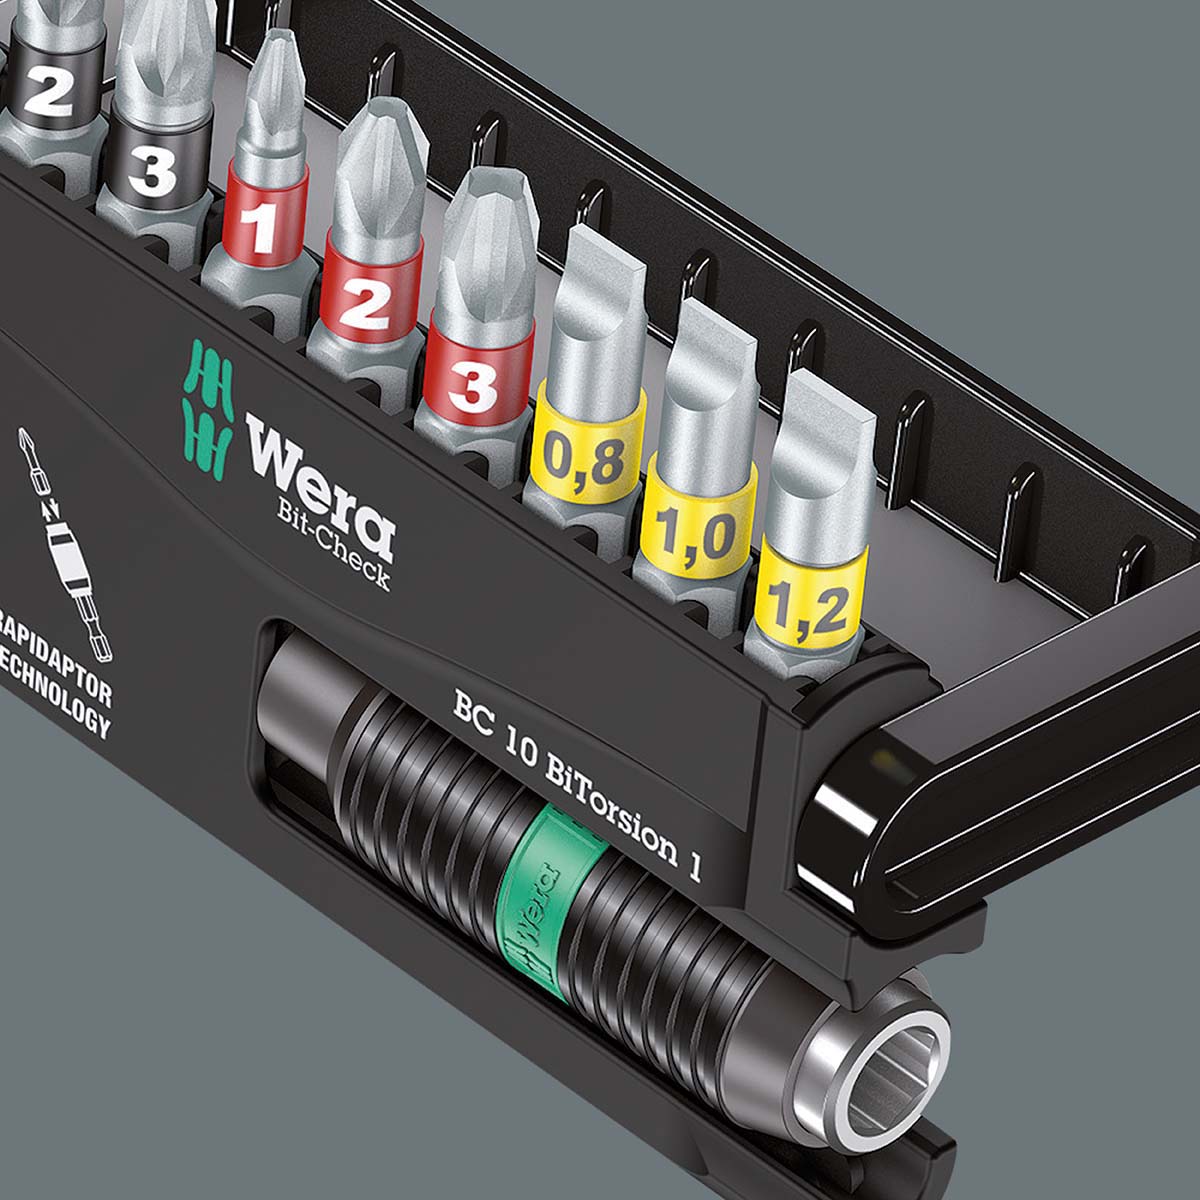 Wera Bc Universal Rapidaptor Bit-check (30-piece Set)